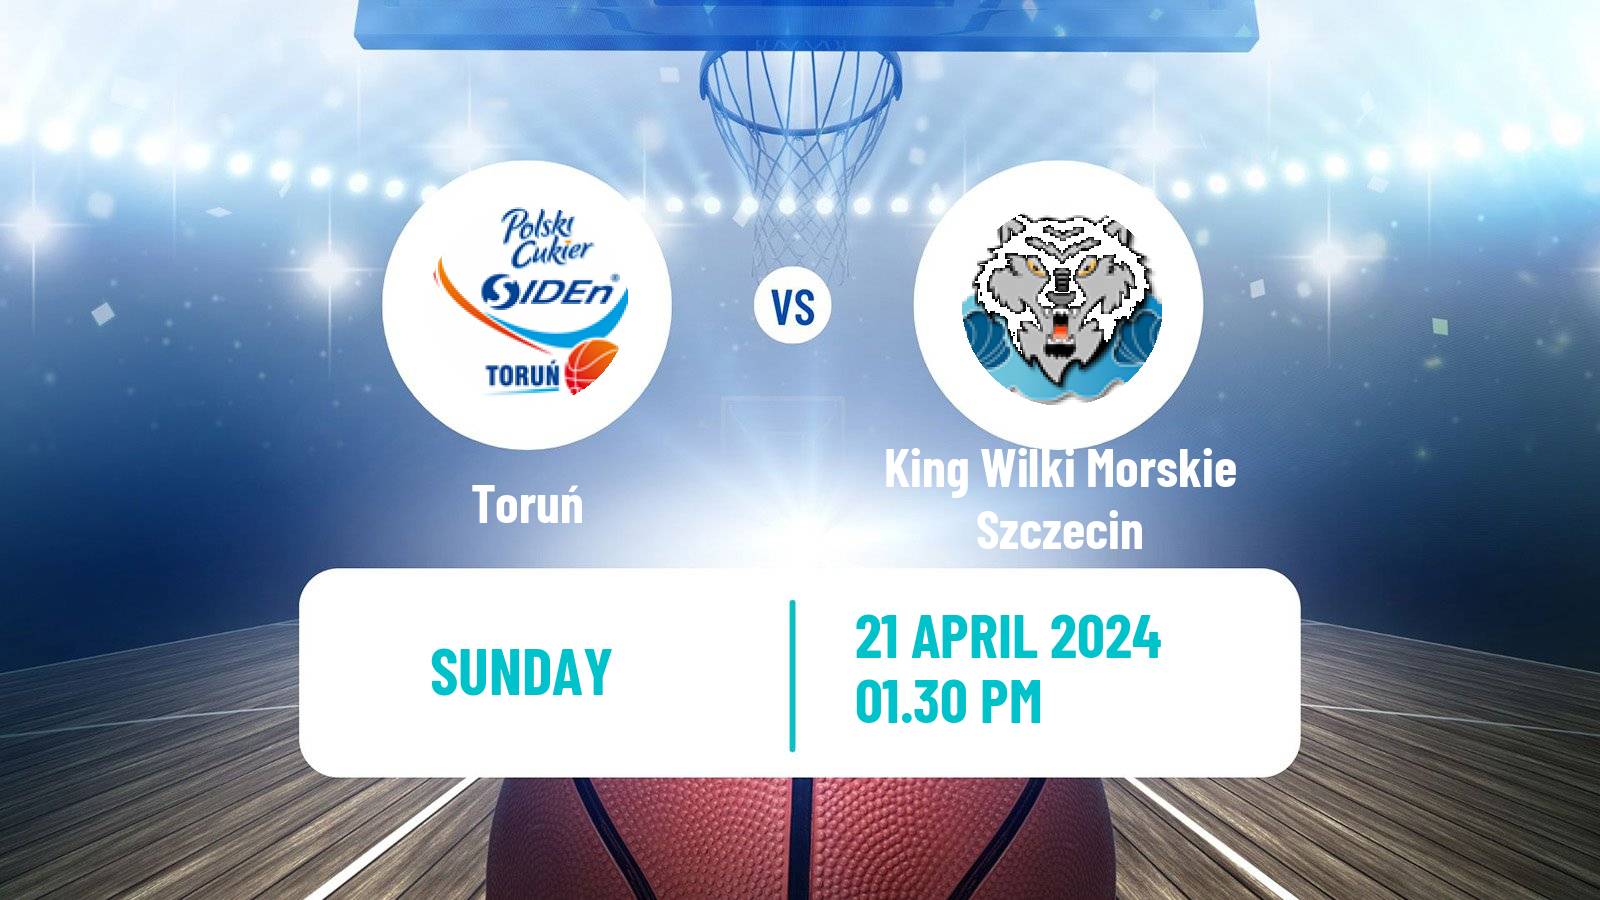 Basketball Polish Basket Liga Toruń - King Wilki Morskie Szczecin